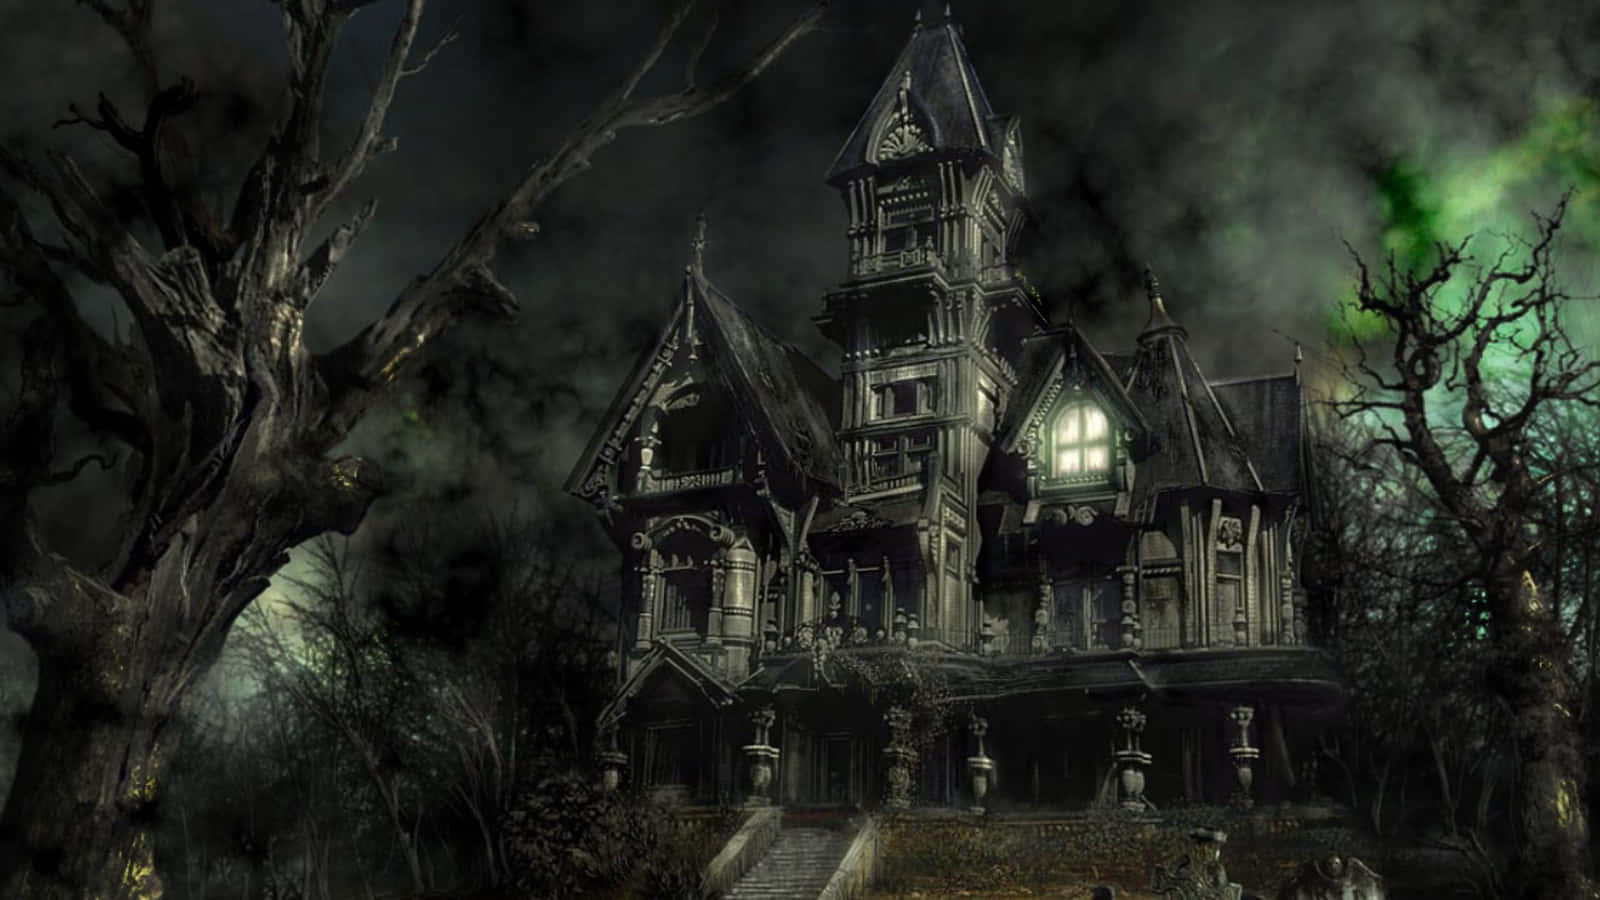 Explore the Haunted Mansion